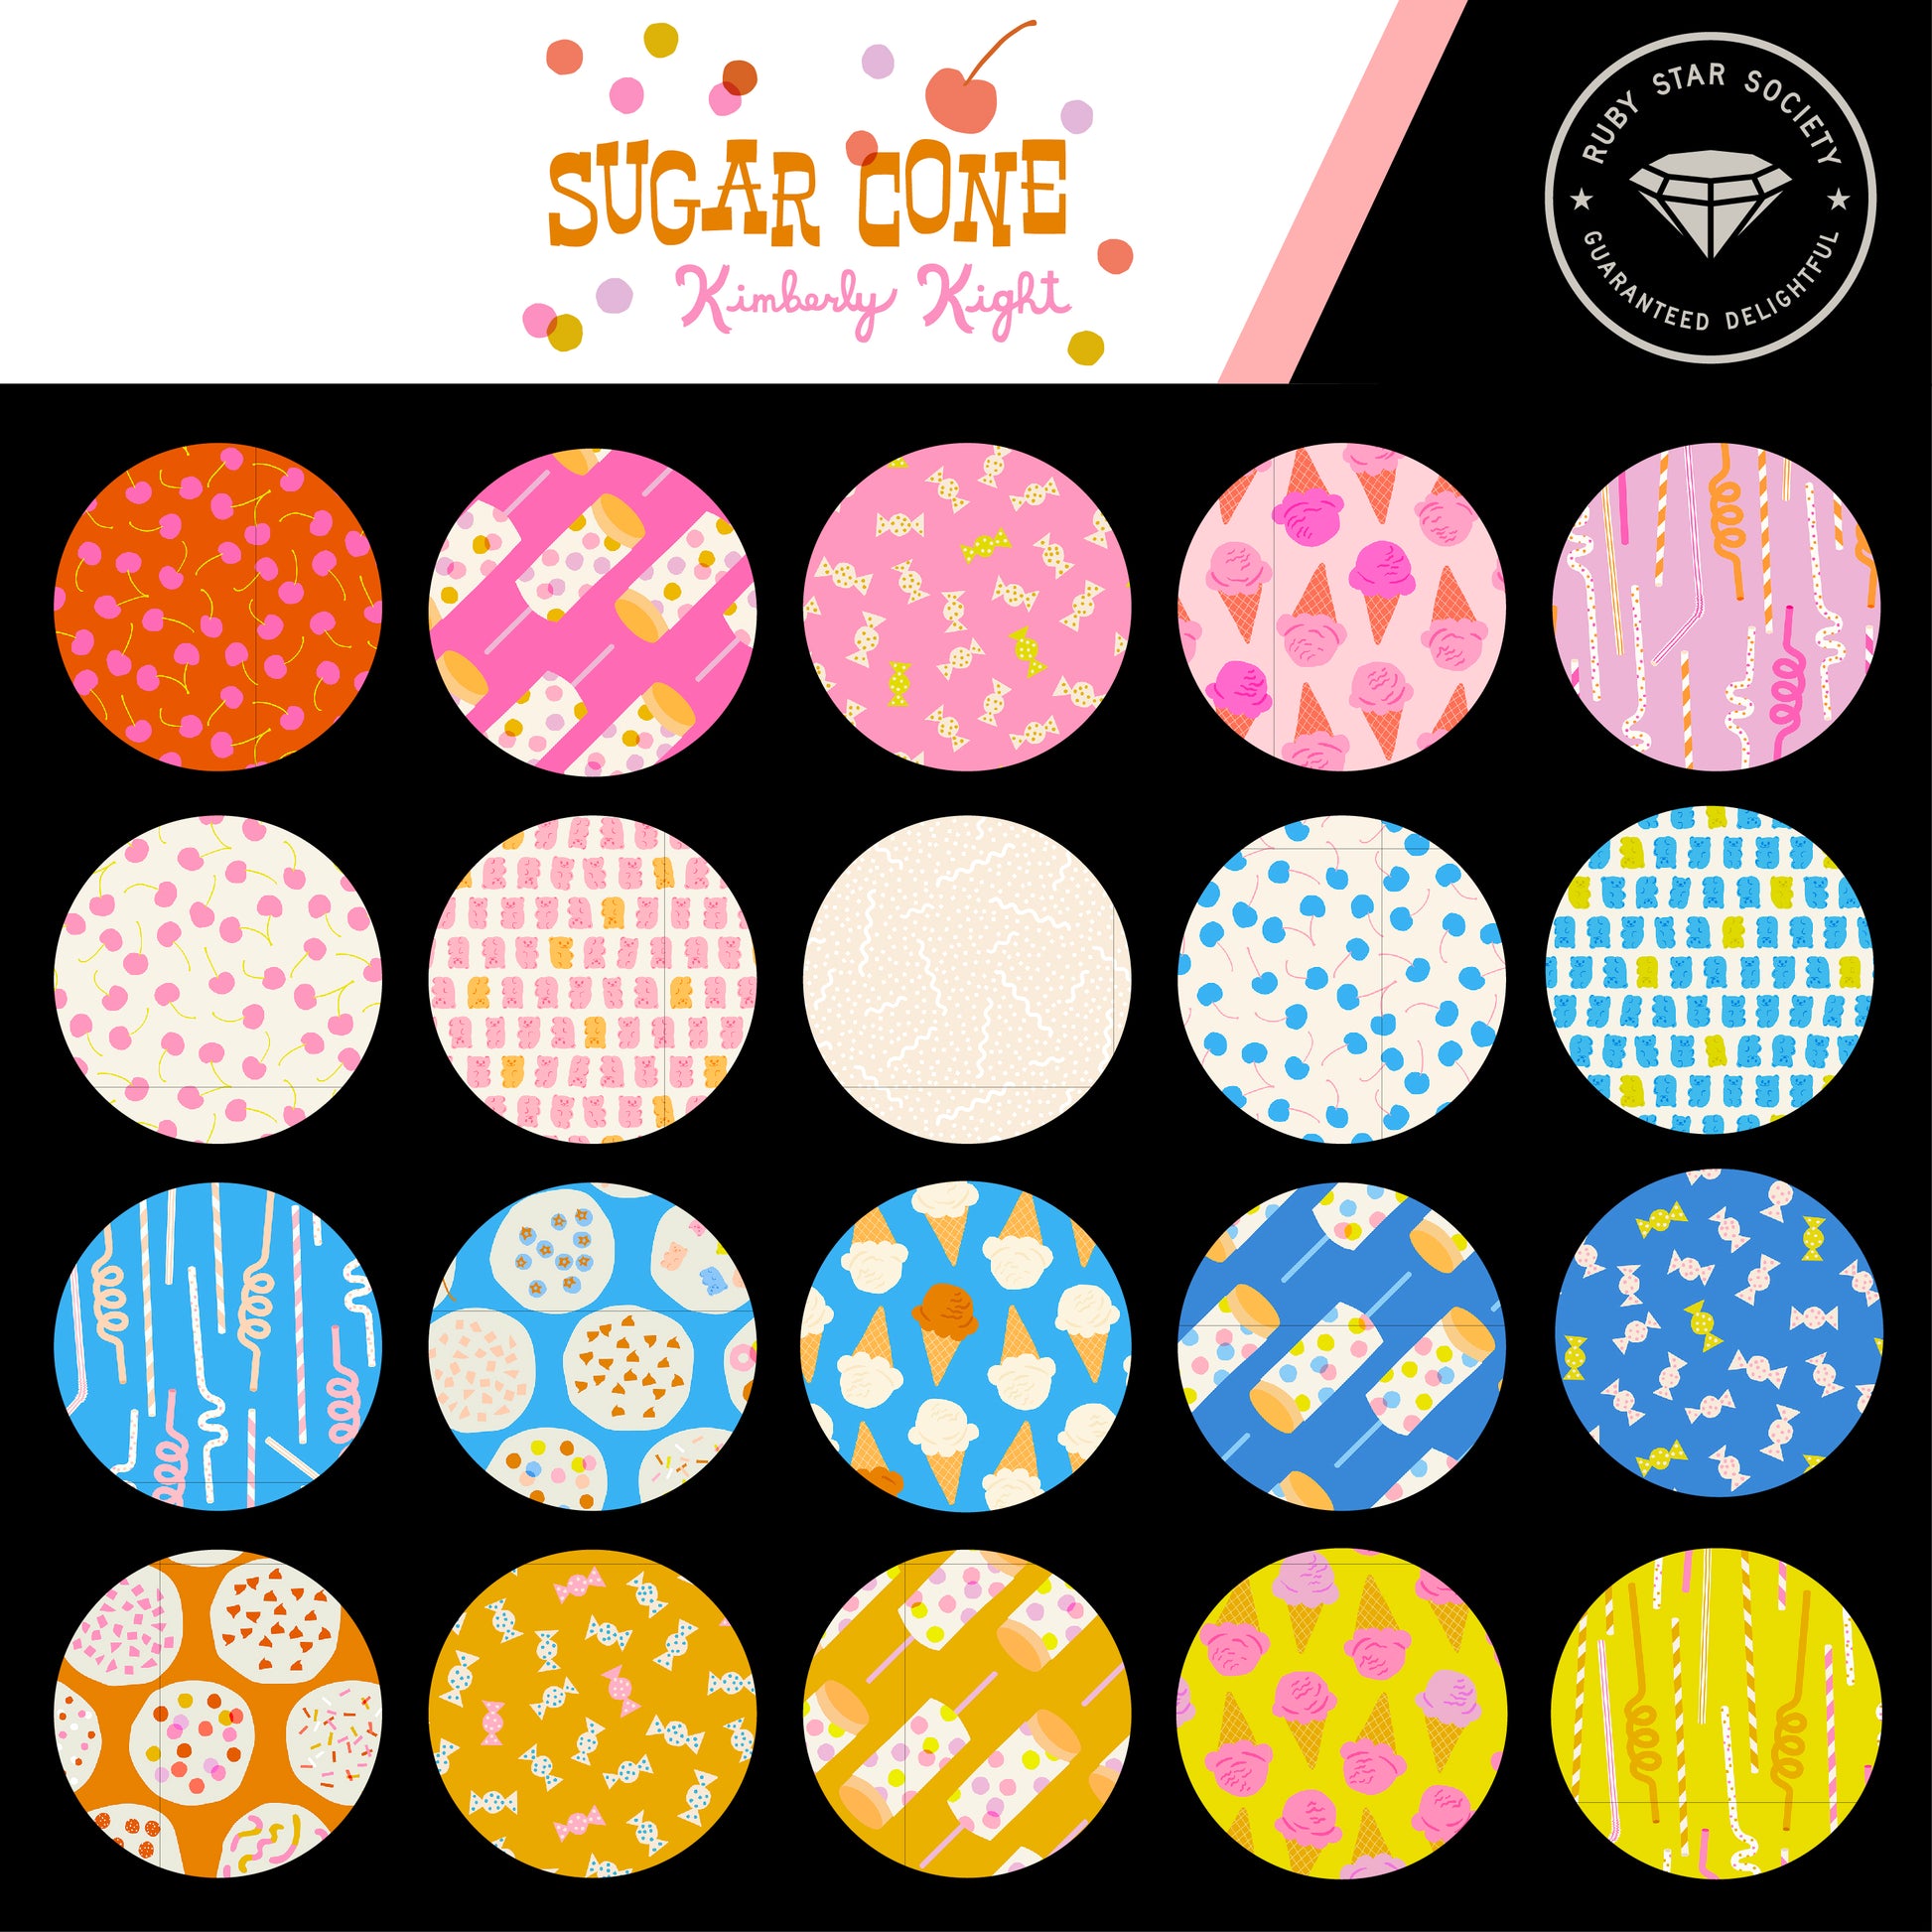 Ruby Star Society Sugar Cone Fabric Swatches